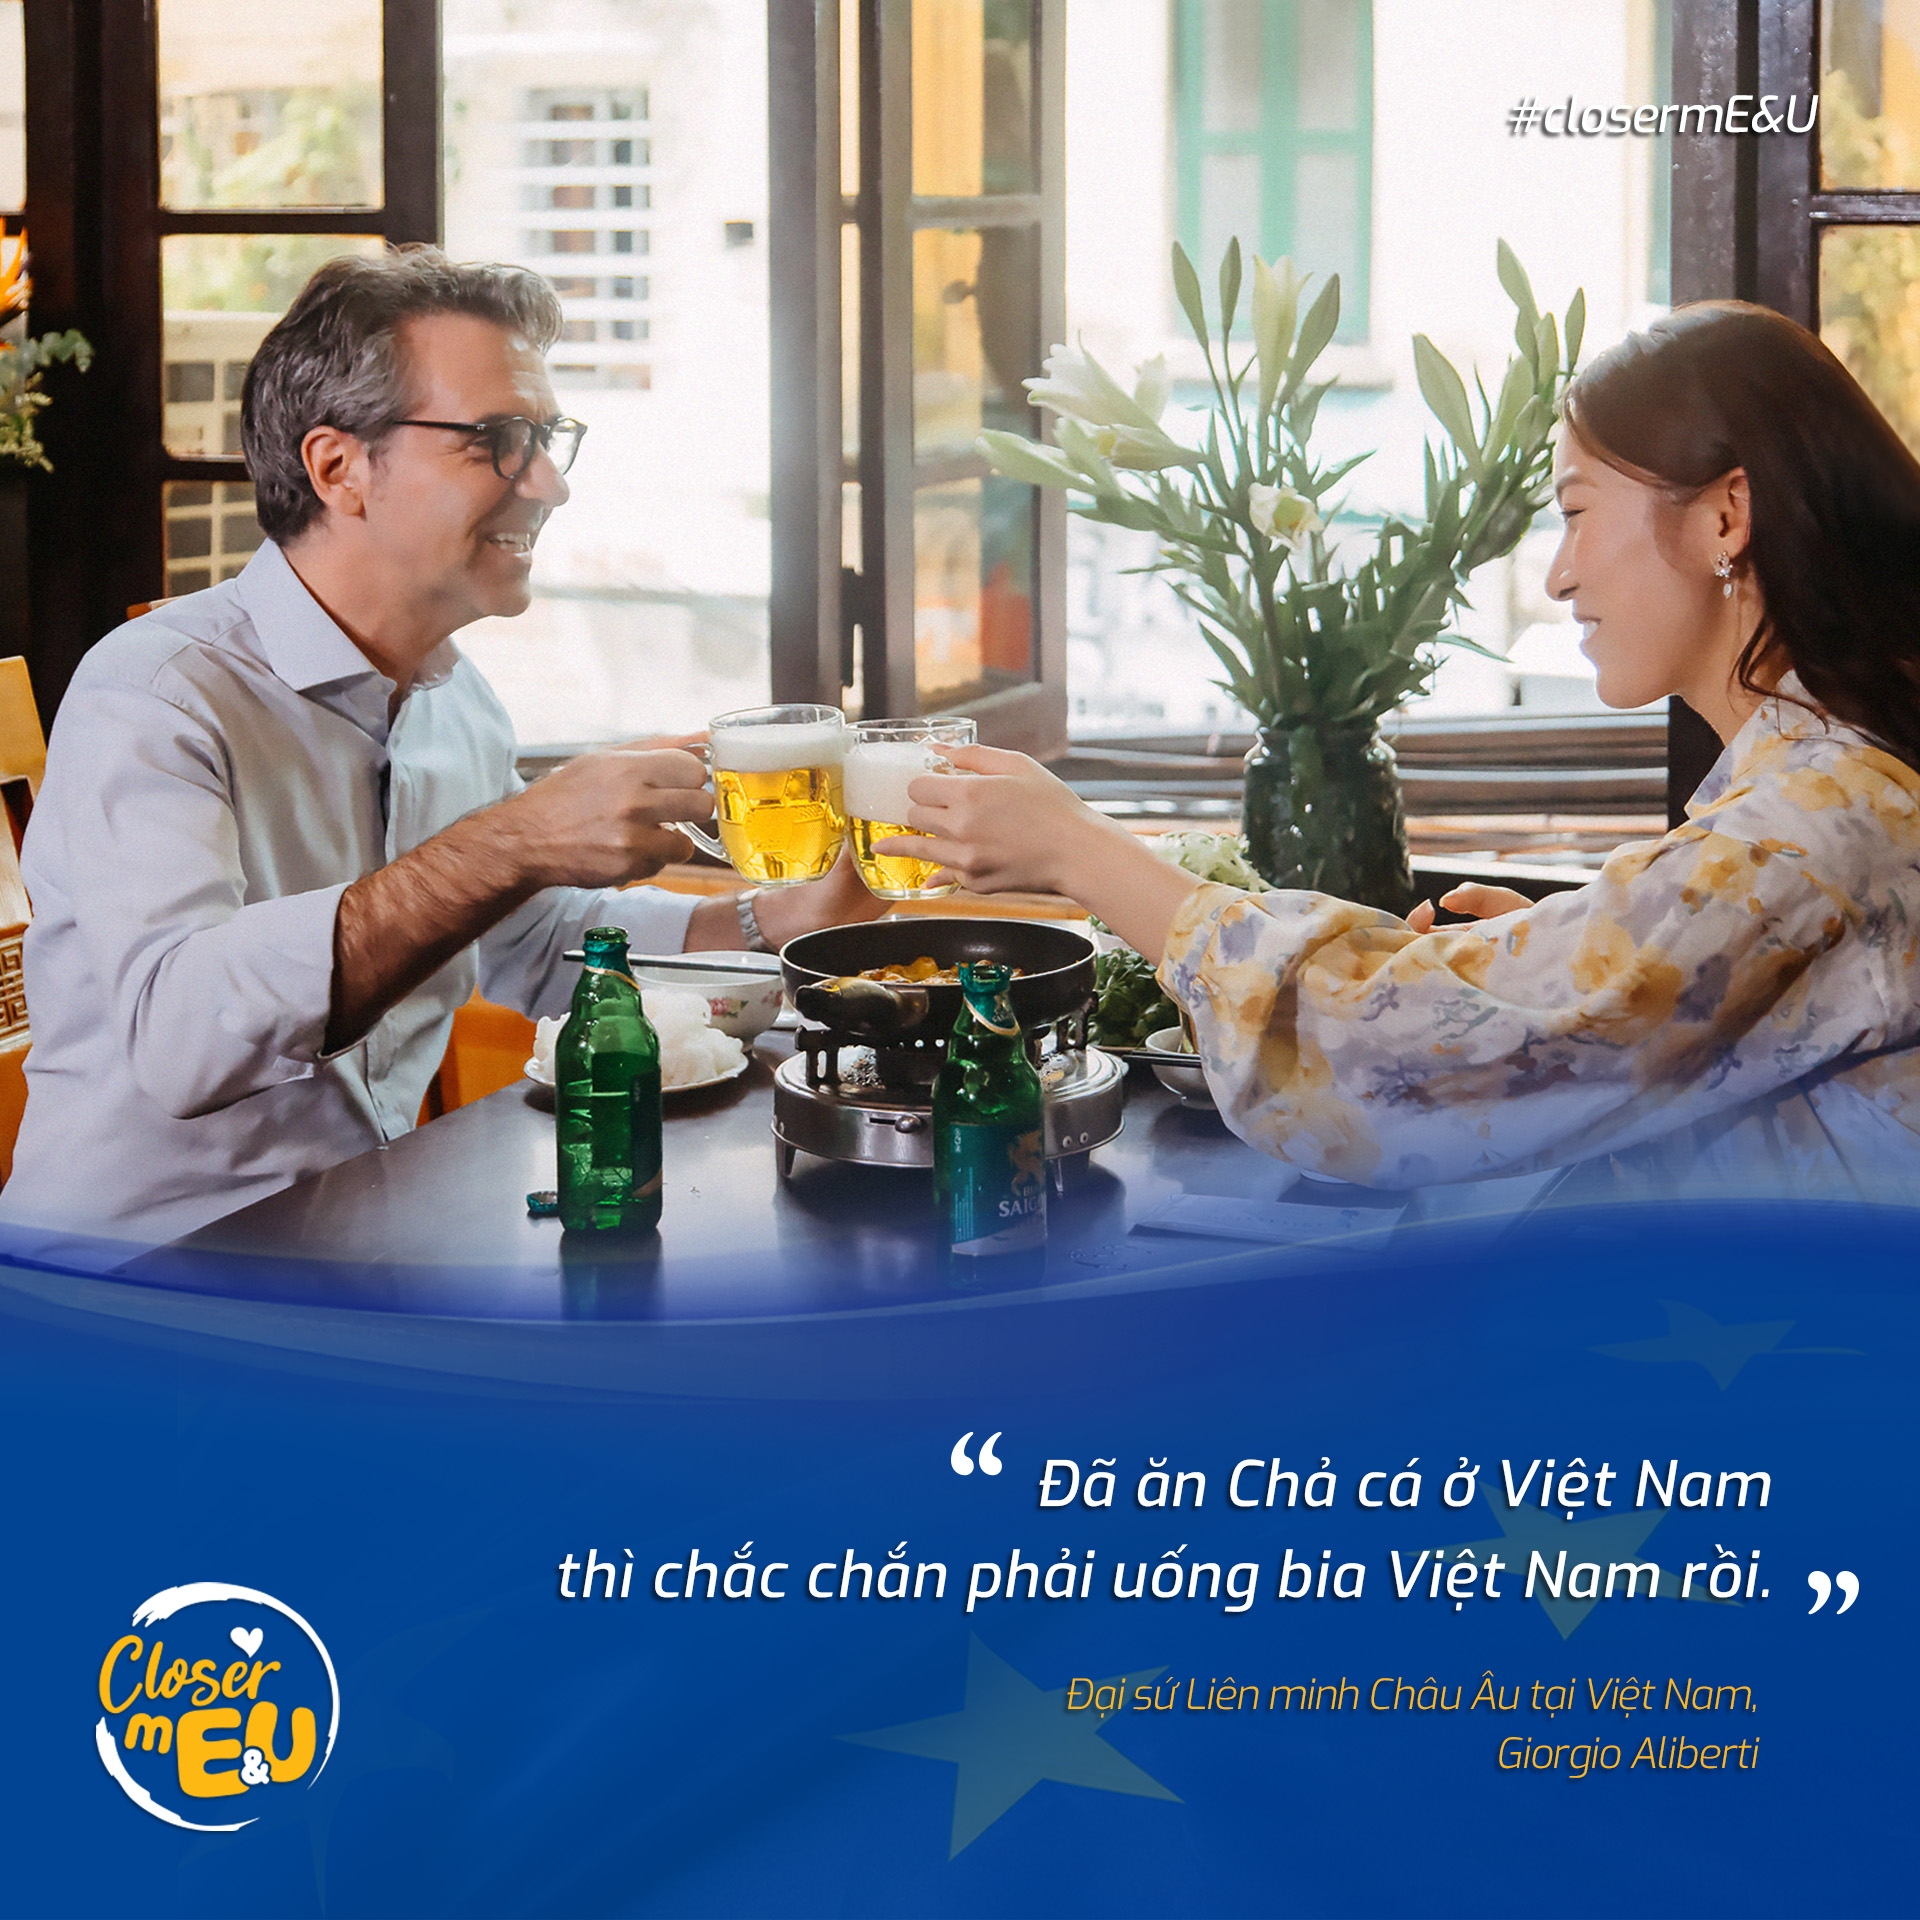 EU ambassador with love for Vietnamese cuisine